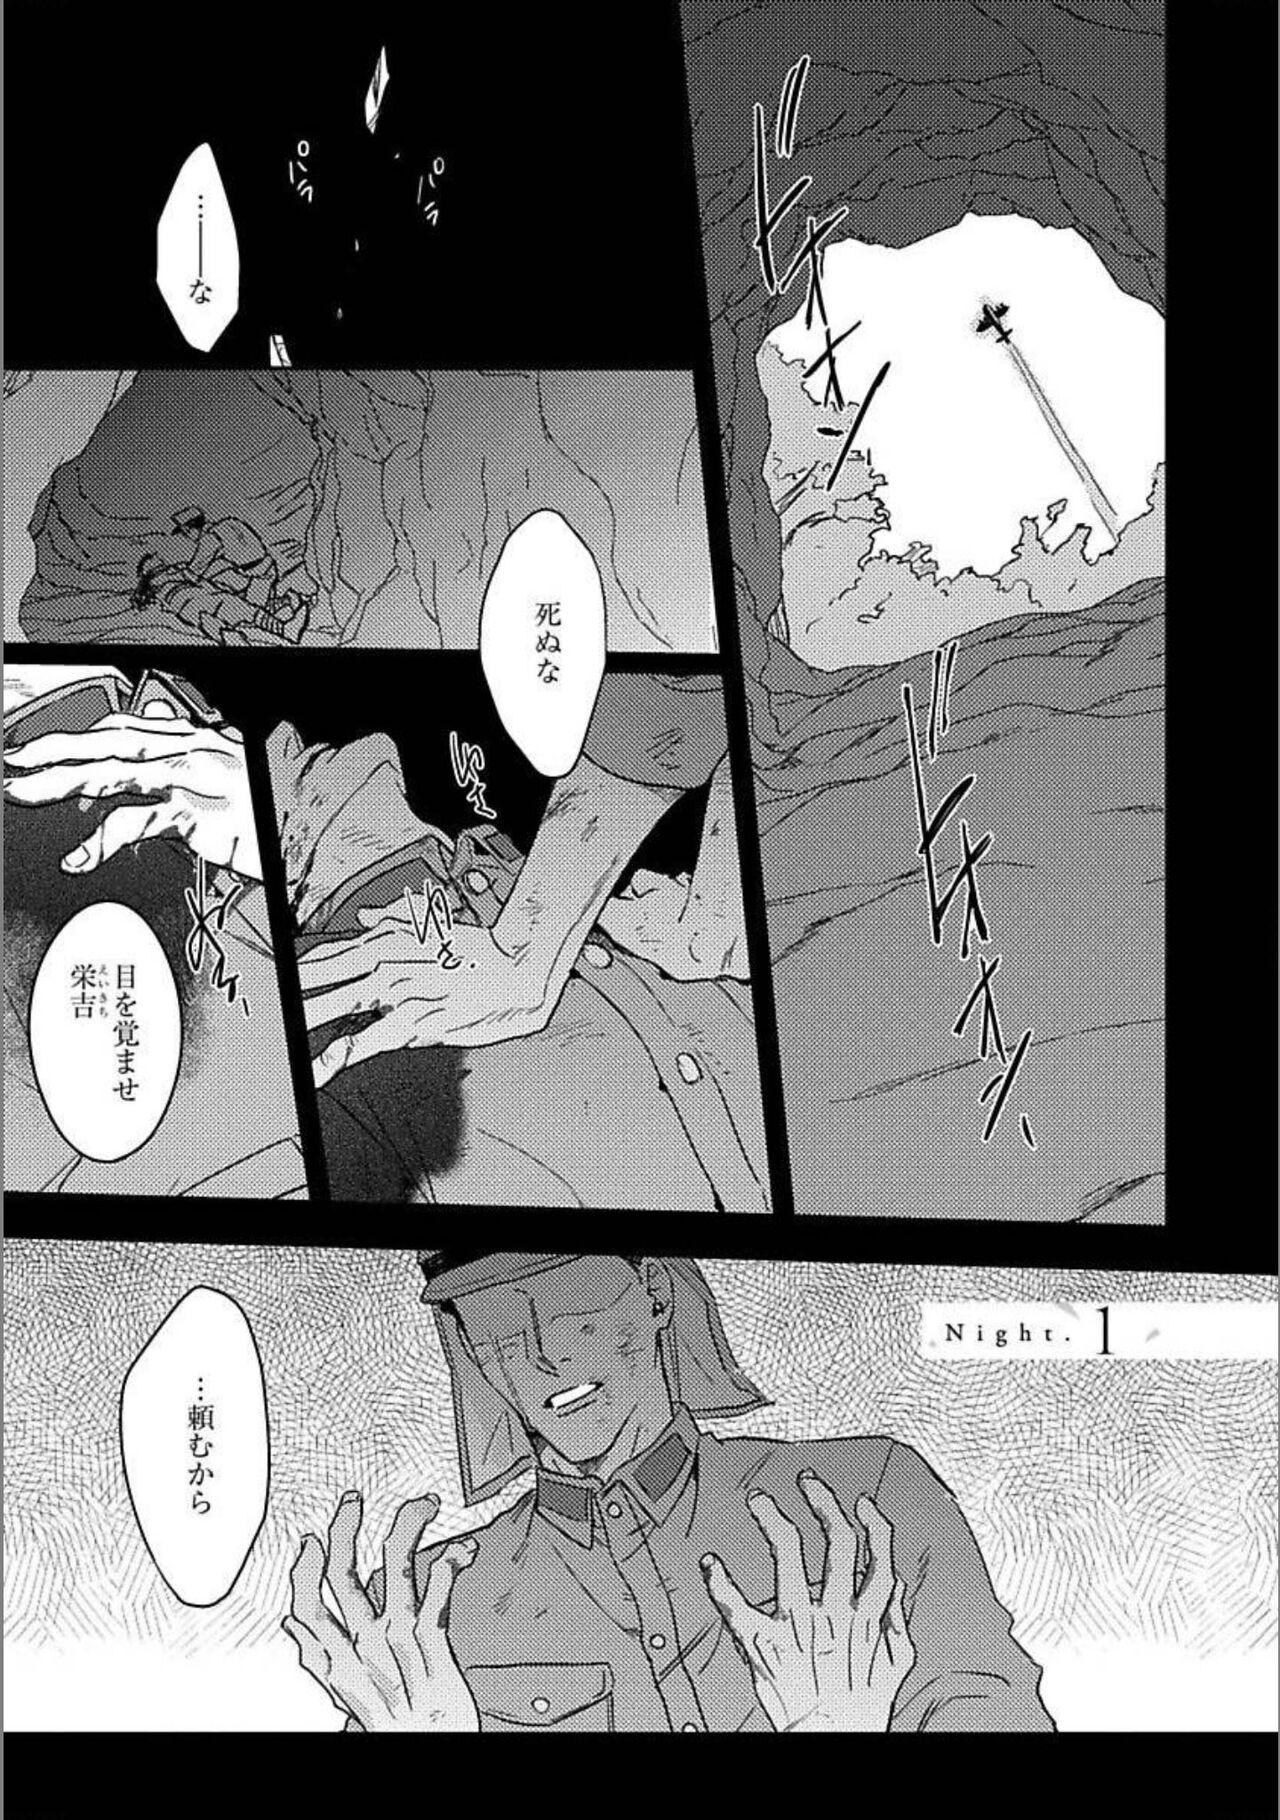 Best Blowjob Hitori de Yoru wa Koerarenai - I Can't Stand Another Night Alone Closeups - Page 4